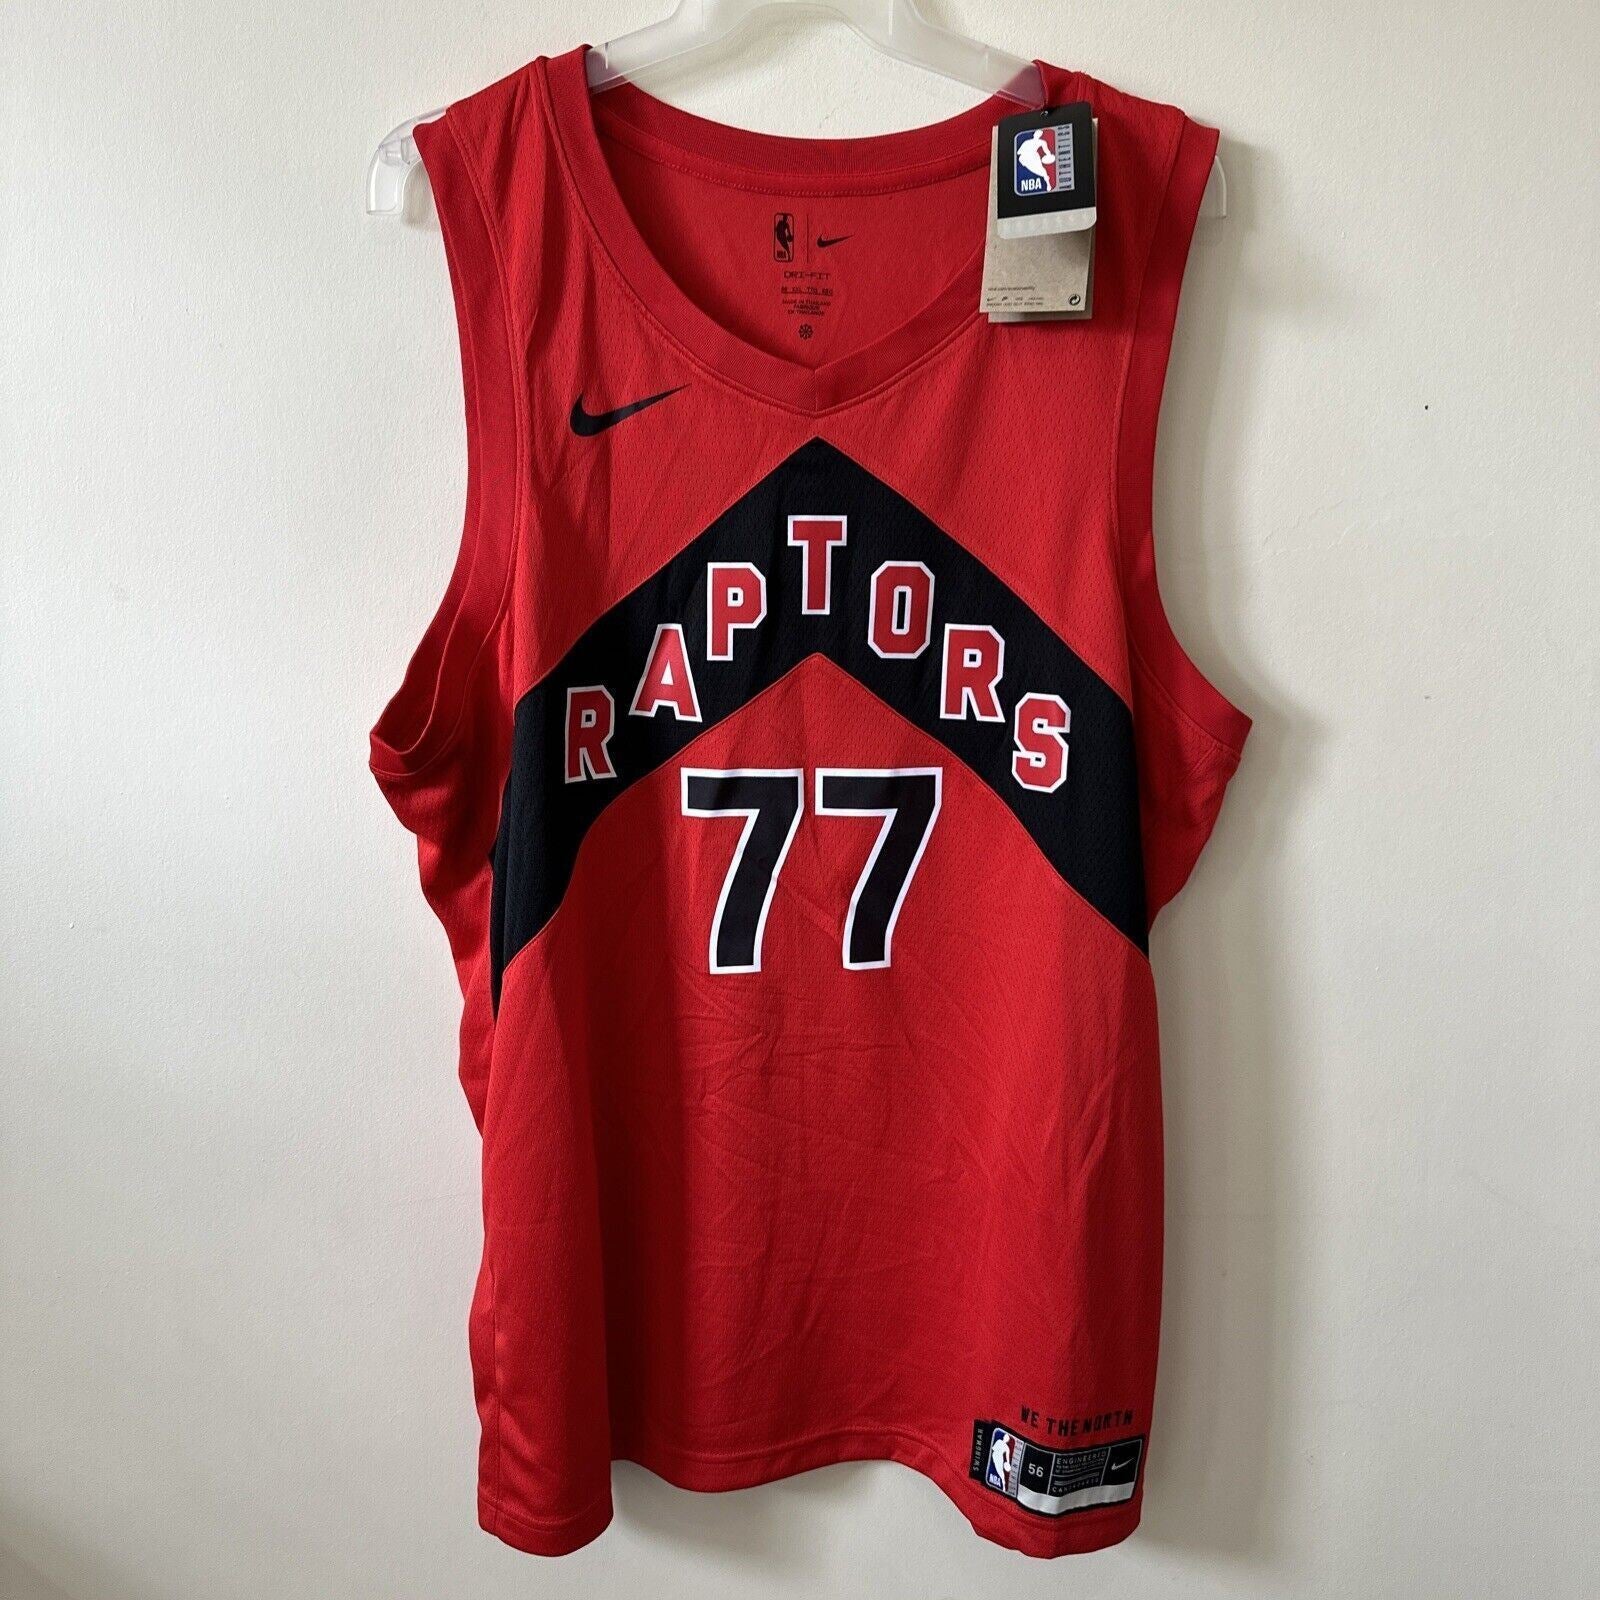 Nike NBA Toronto Raptors Swingman Edition Jersey FAED 77 Basketball Men’s XXL